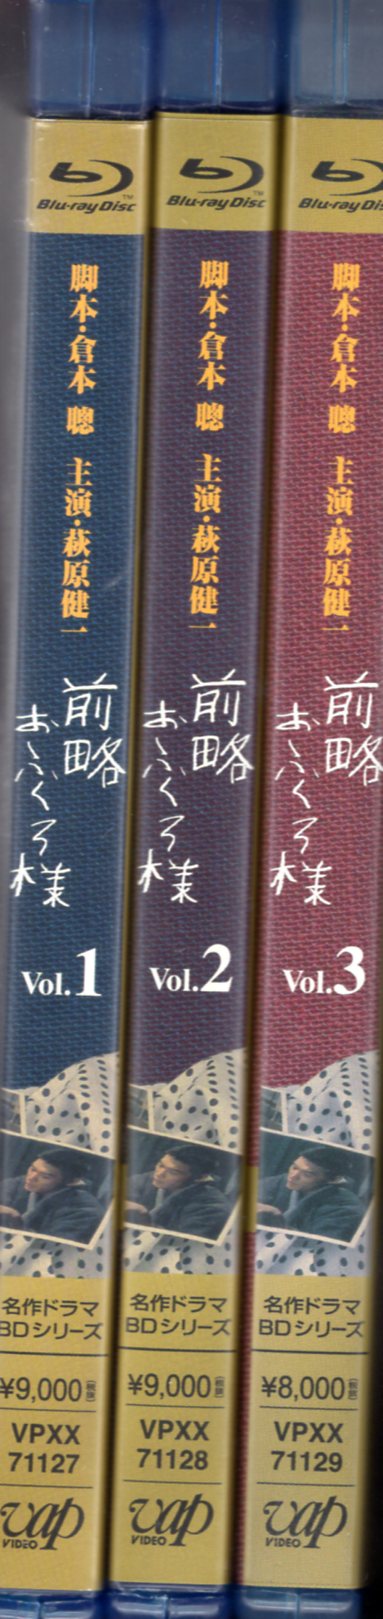 Blu-Ray]前略おふくろ様 Vol.2 萩原健一 - ブルーレイ